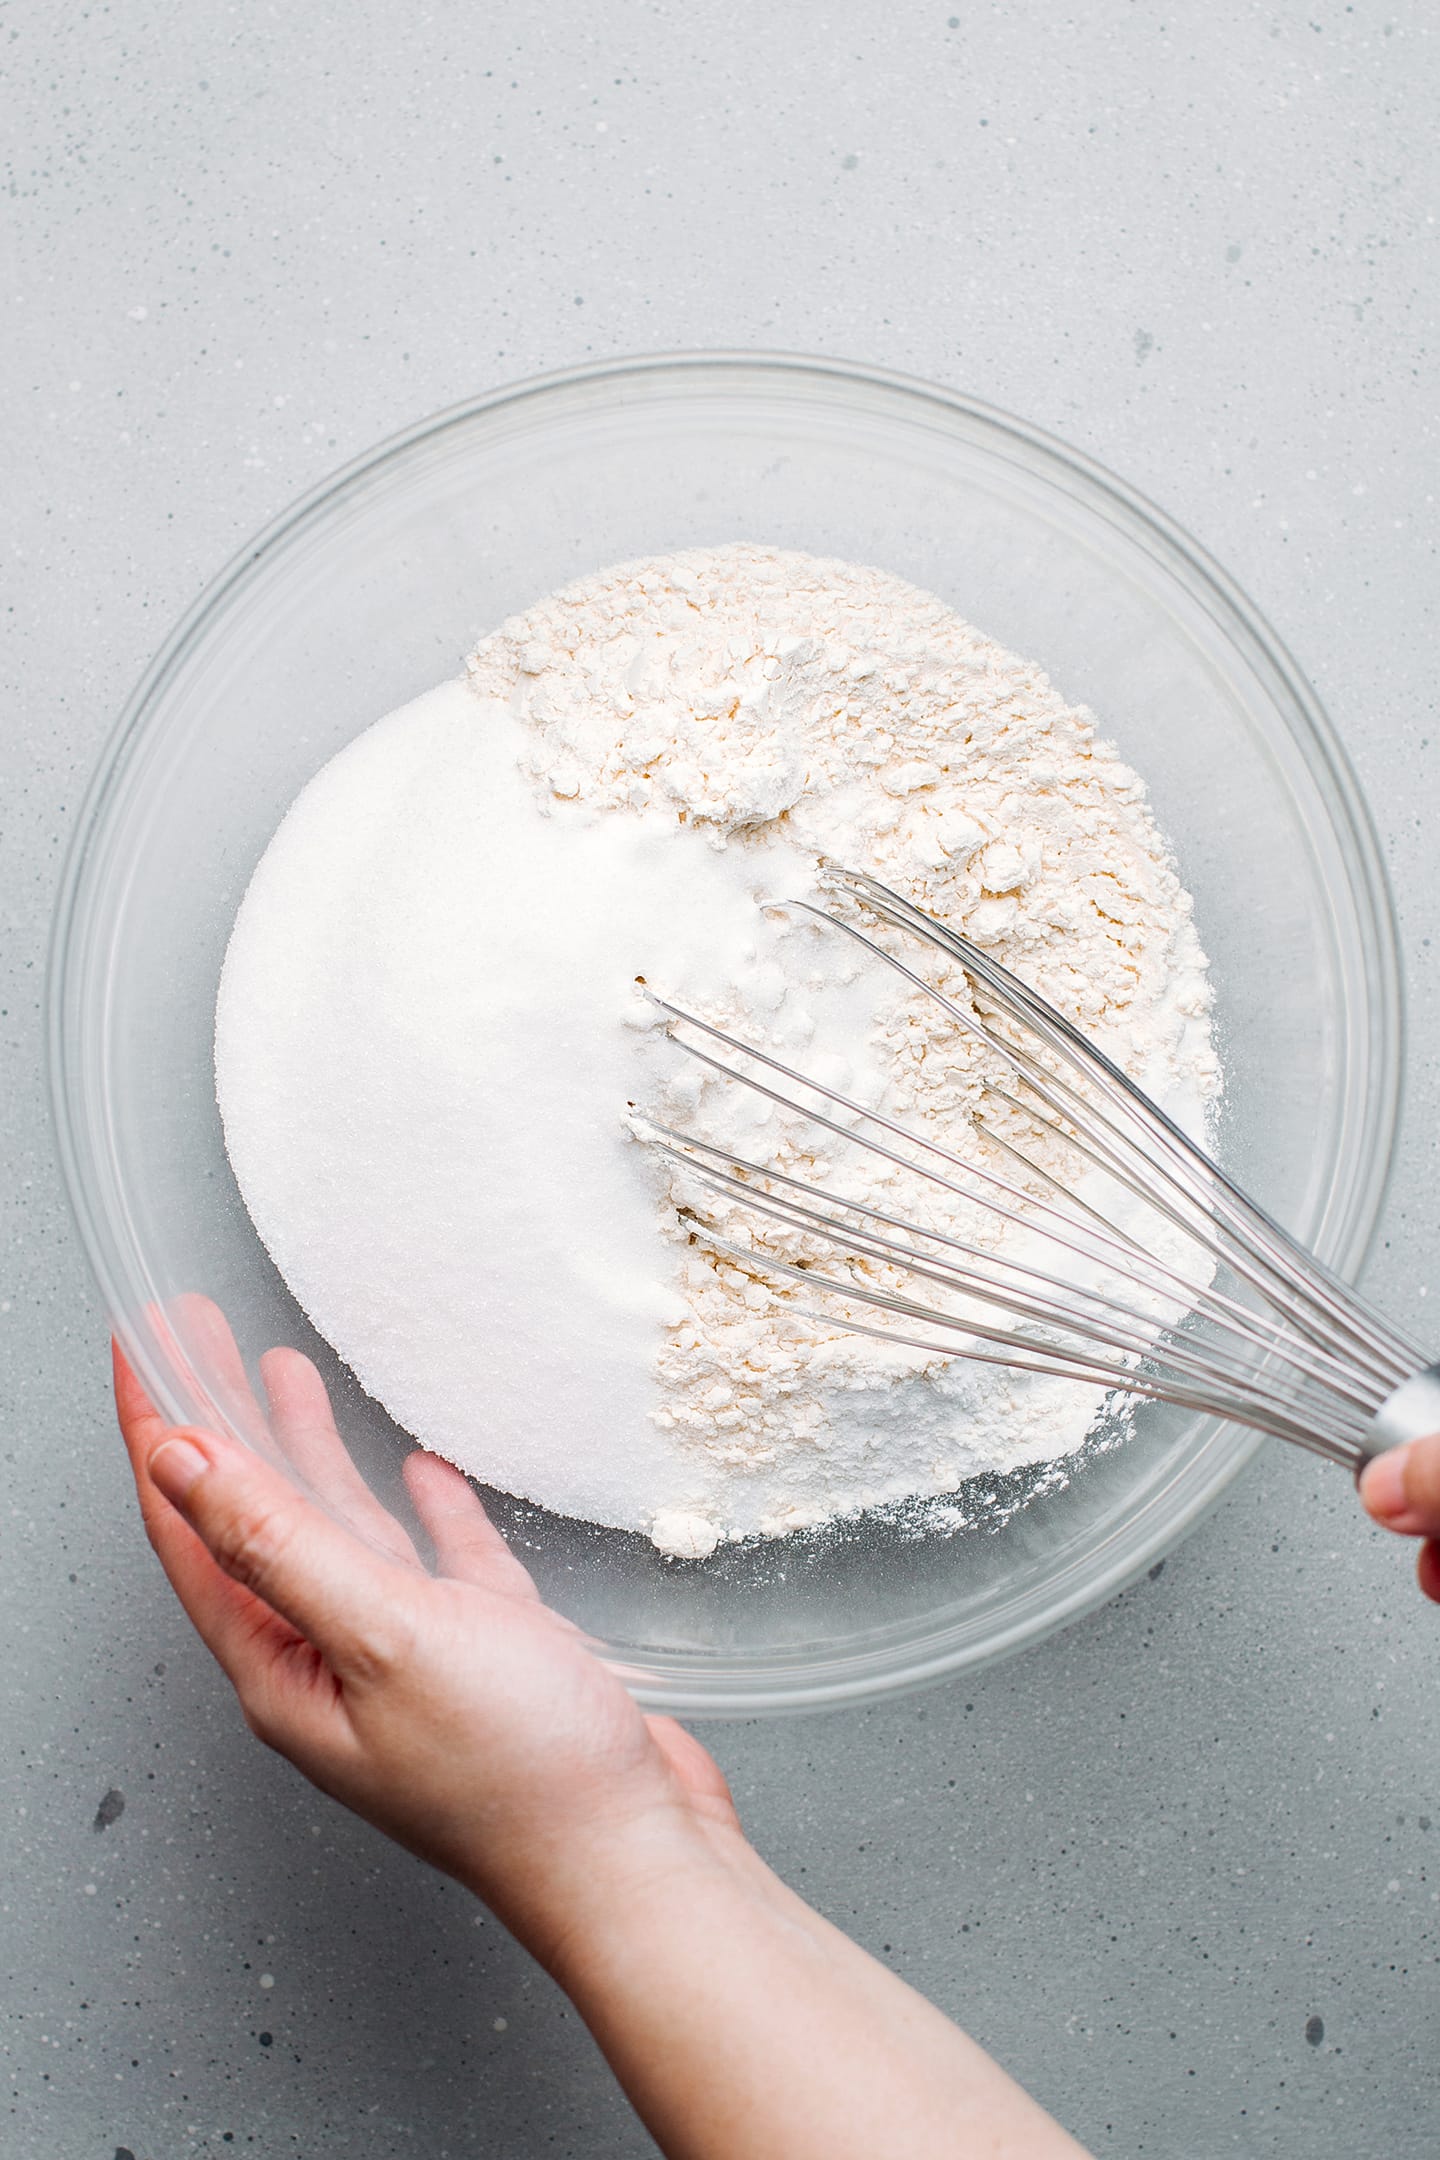 Whisking flour, sugar, and baking powder in a mixing bowl.